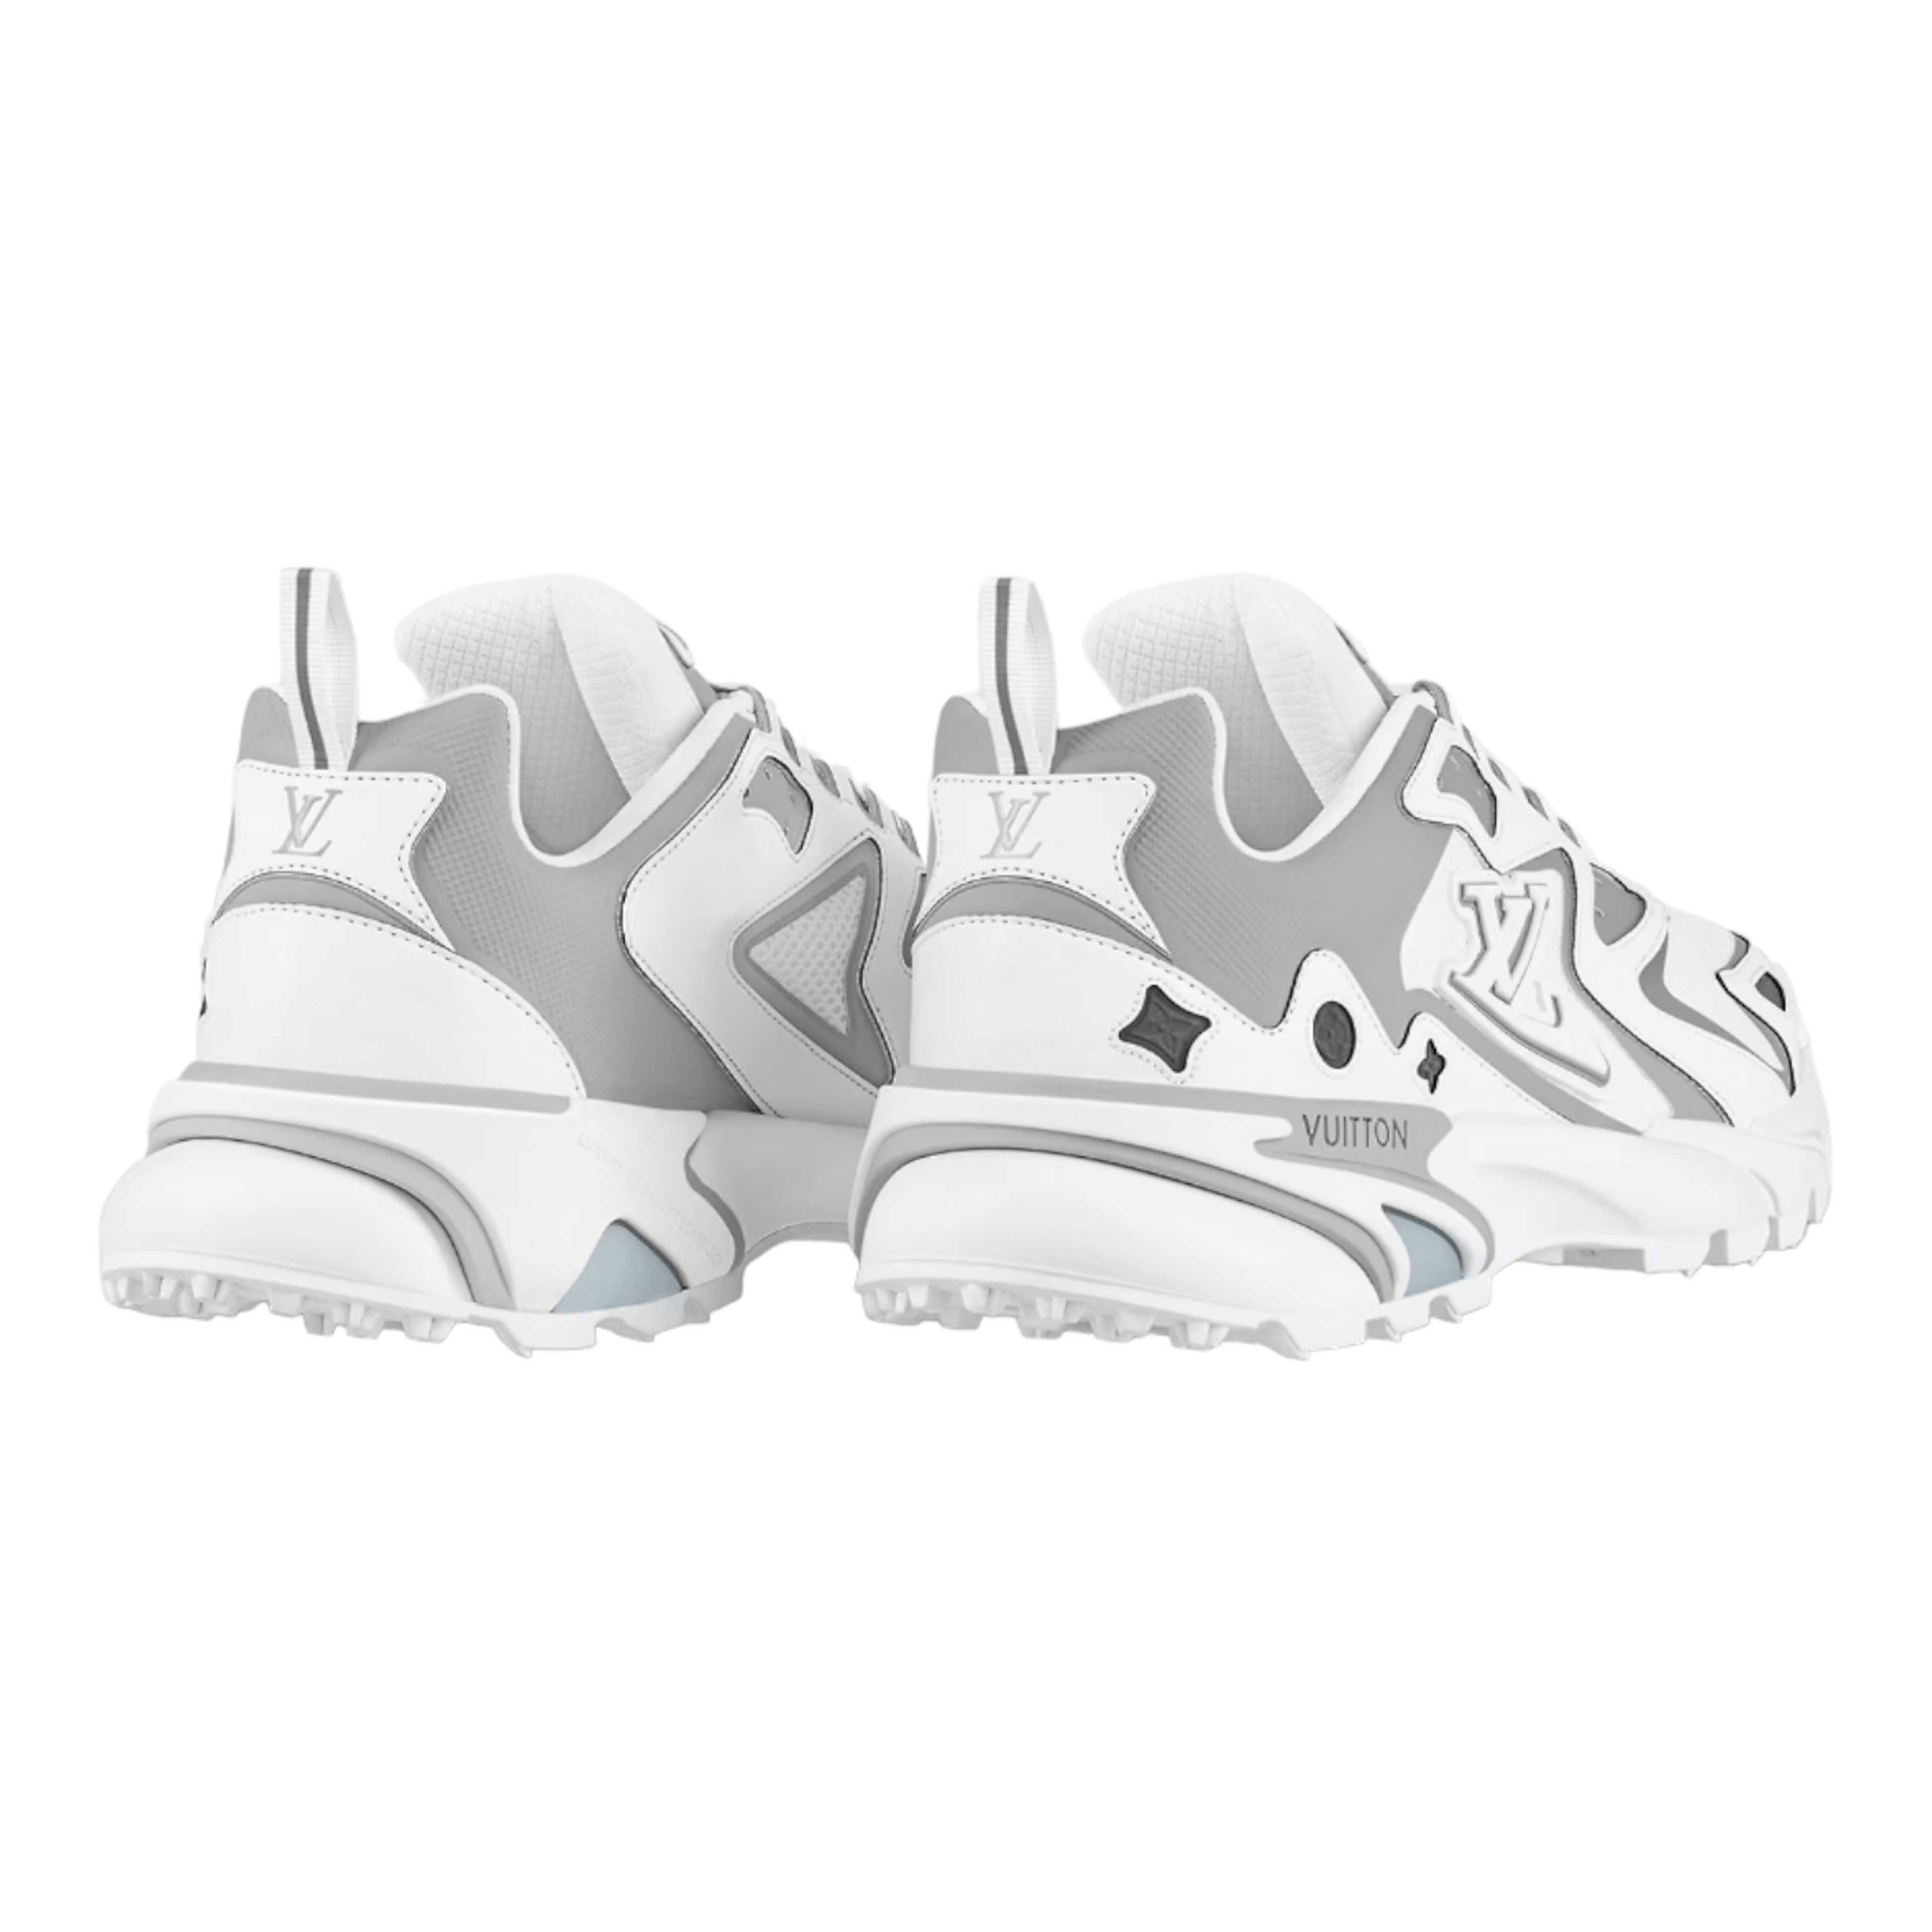 Alternate View 2 of Louis Vuitton Runner Tatic Sneaker White Grey